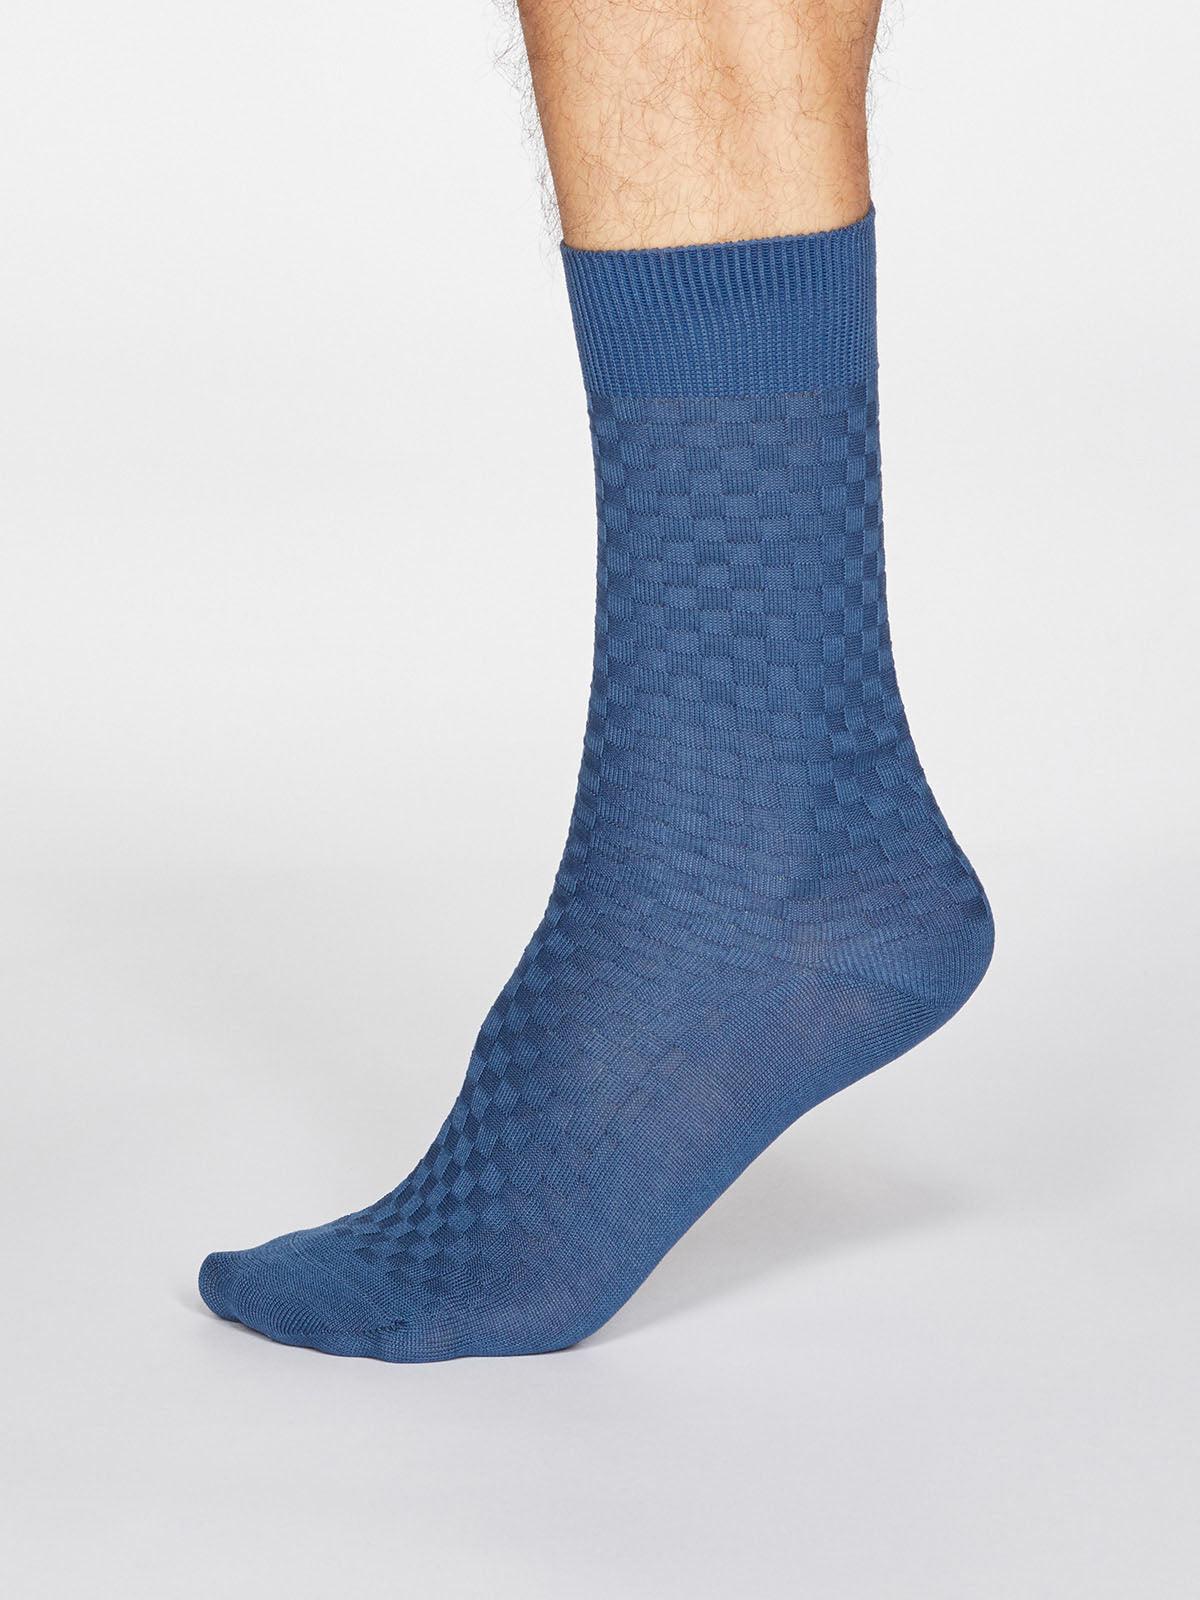 Cameron Dress Socks - Denim Blue